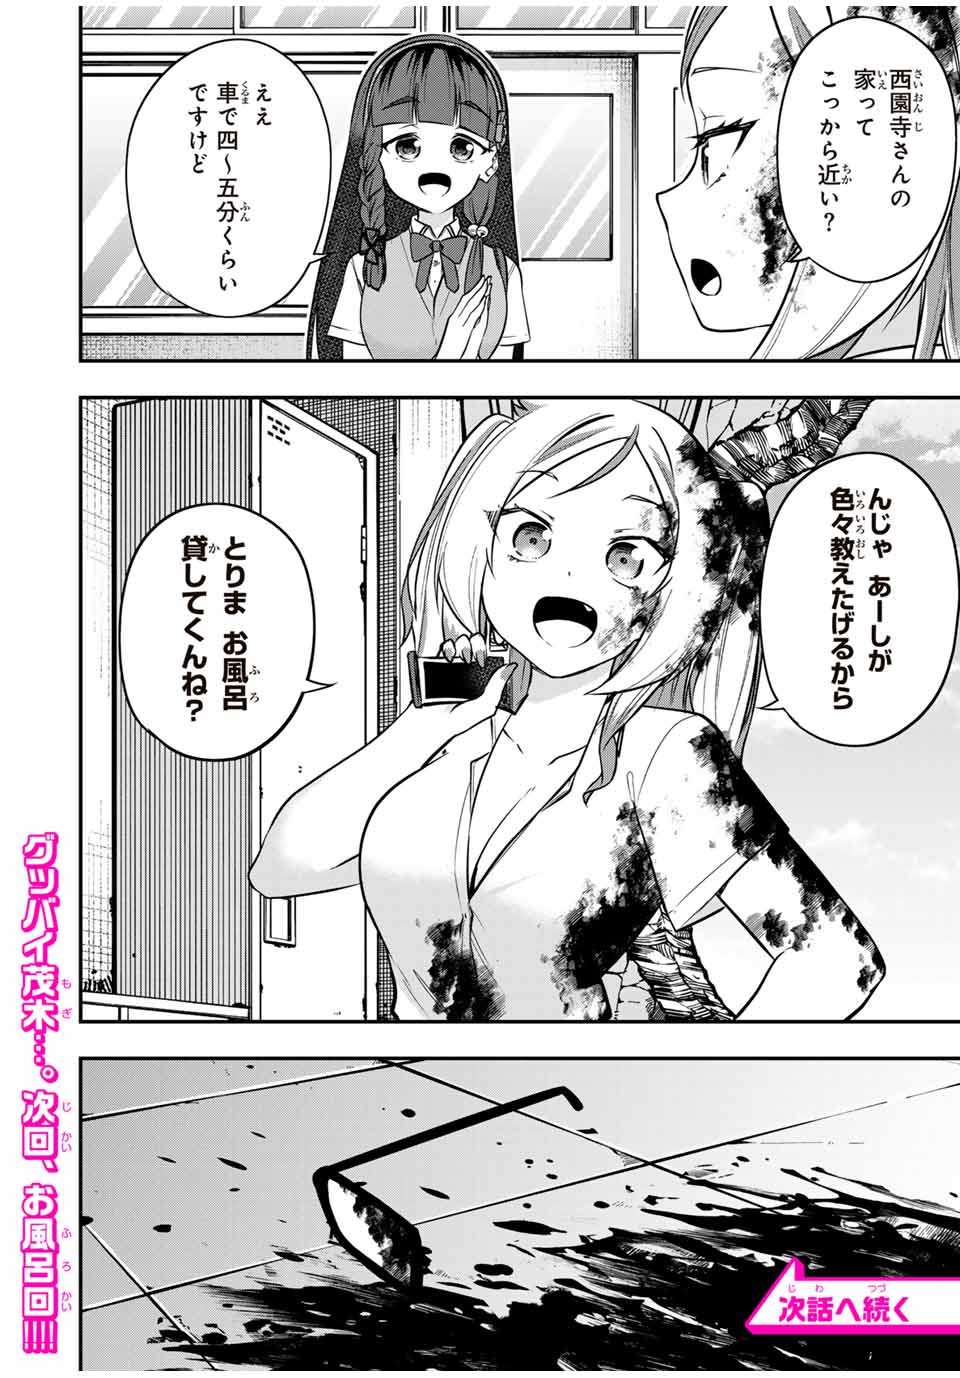 Heroine wa xx Okasegitai - Chapter 3 - Page 20